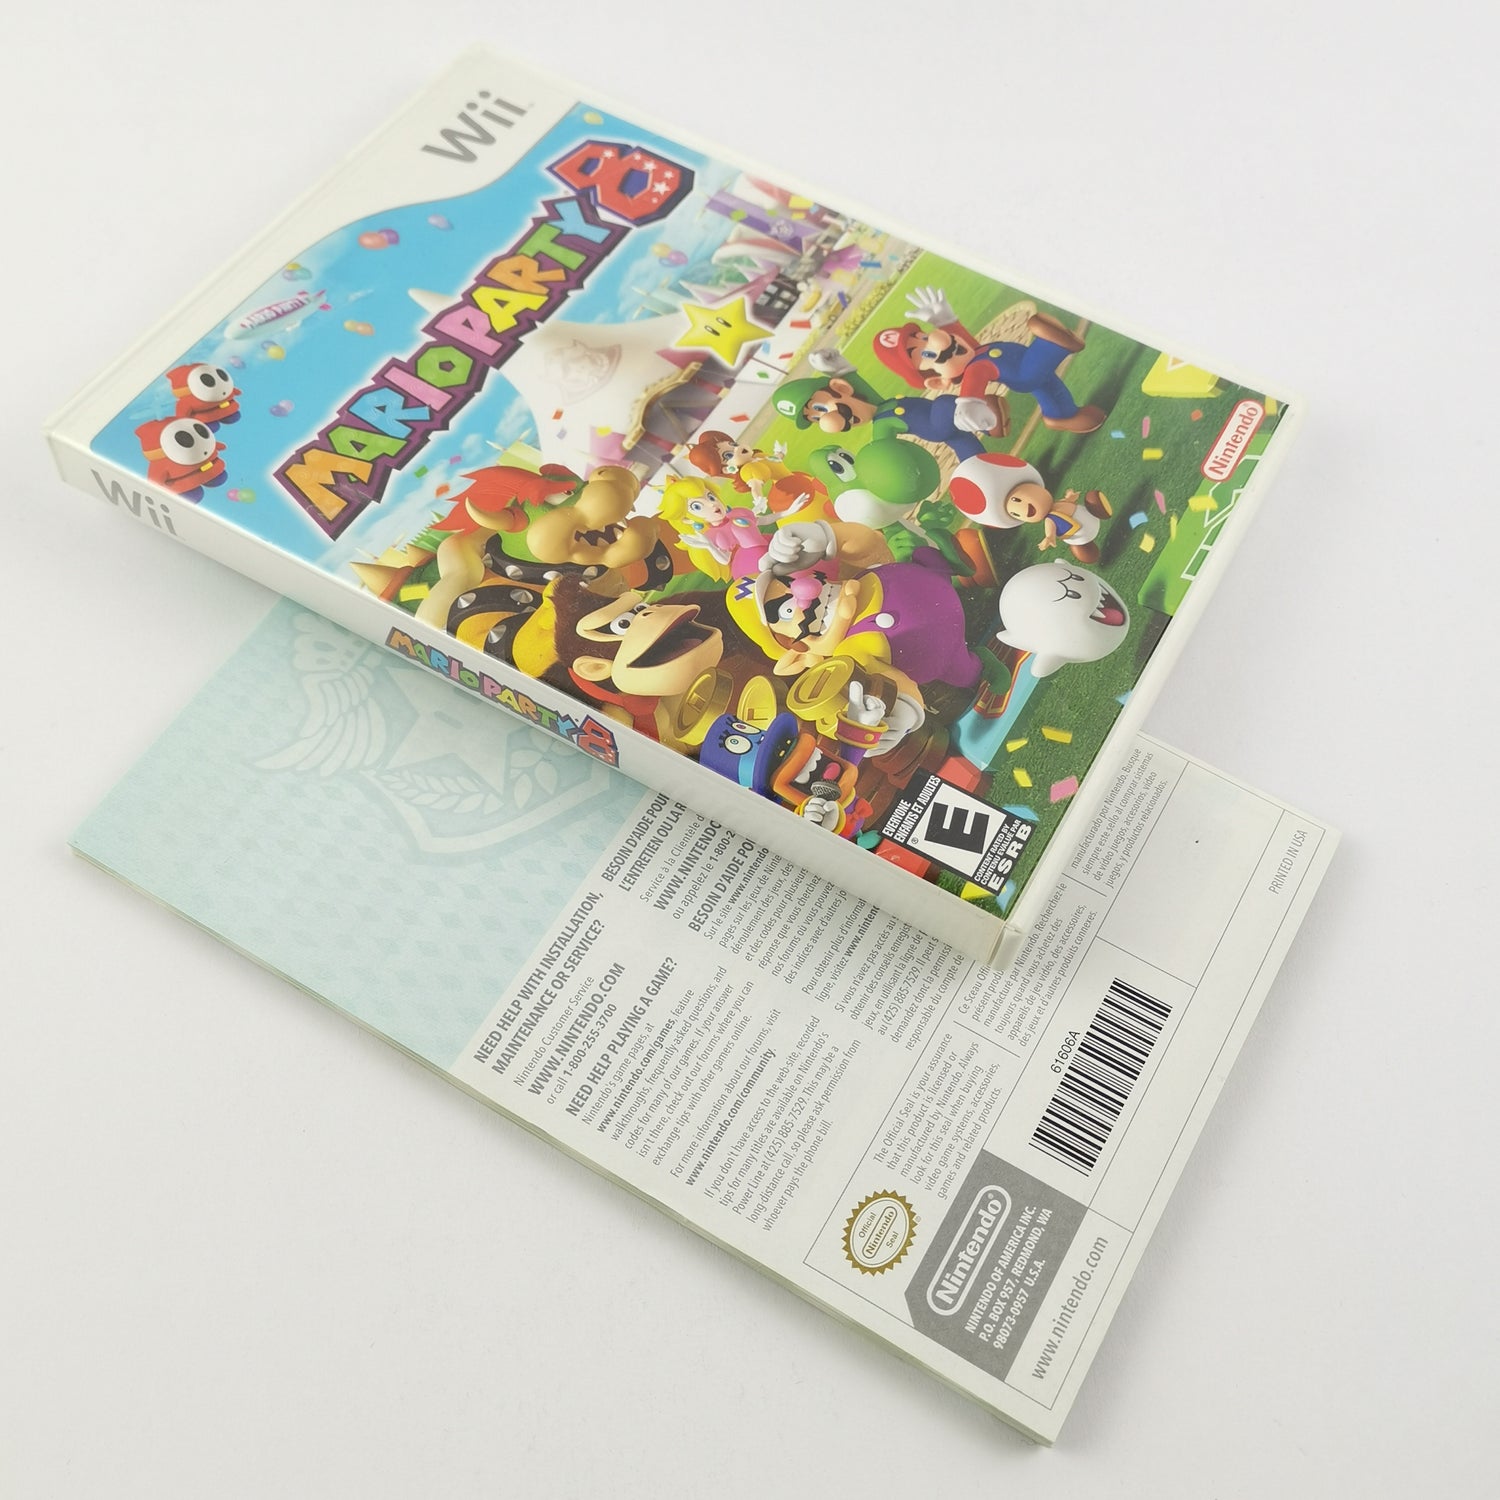 Nintendo Wii game: Mario Party 8 - original packaging instructions | NTSC-U/C USA